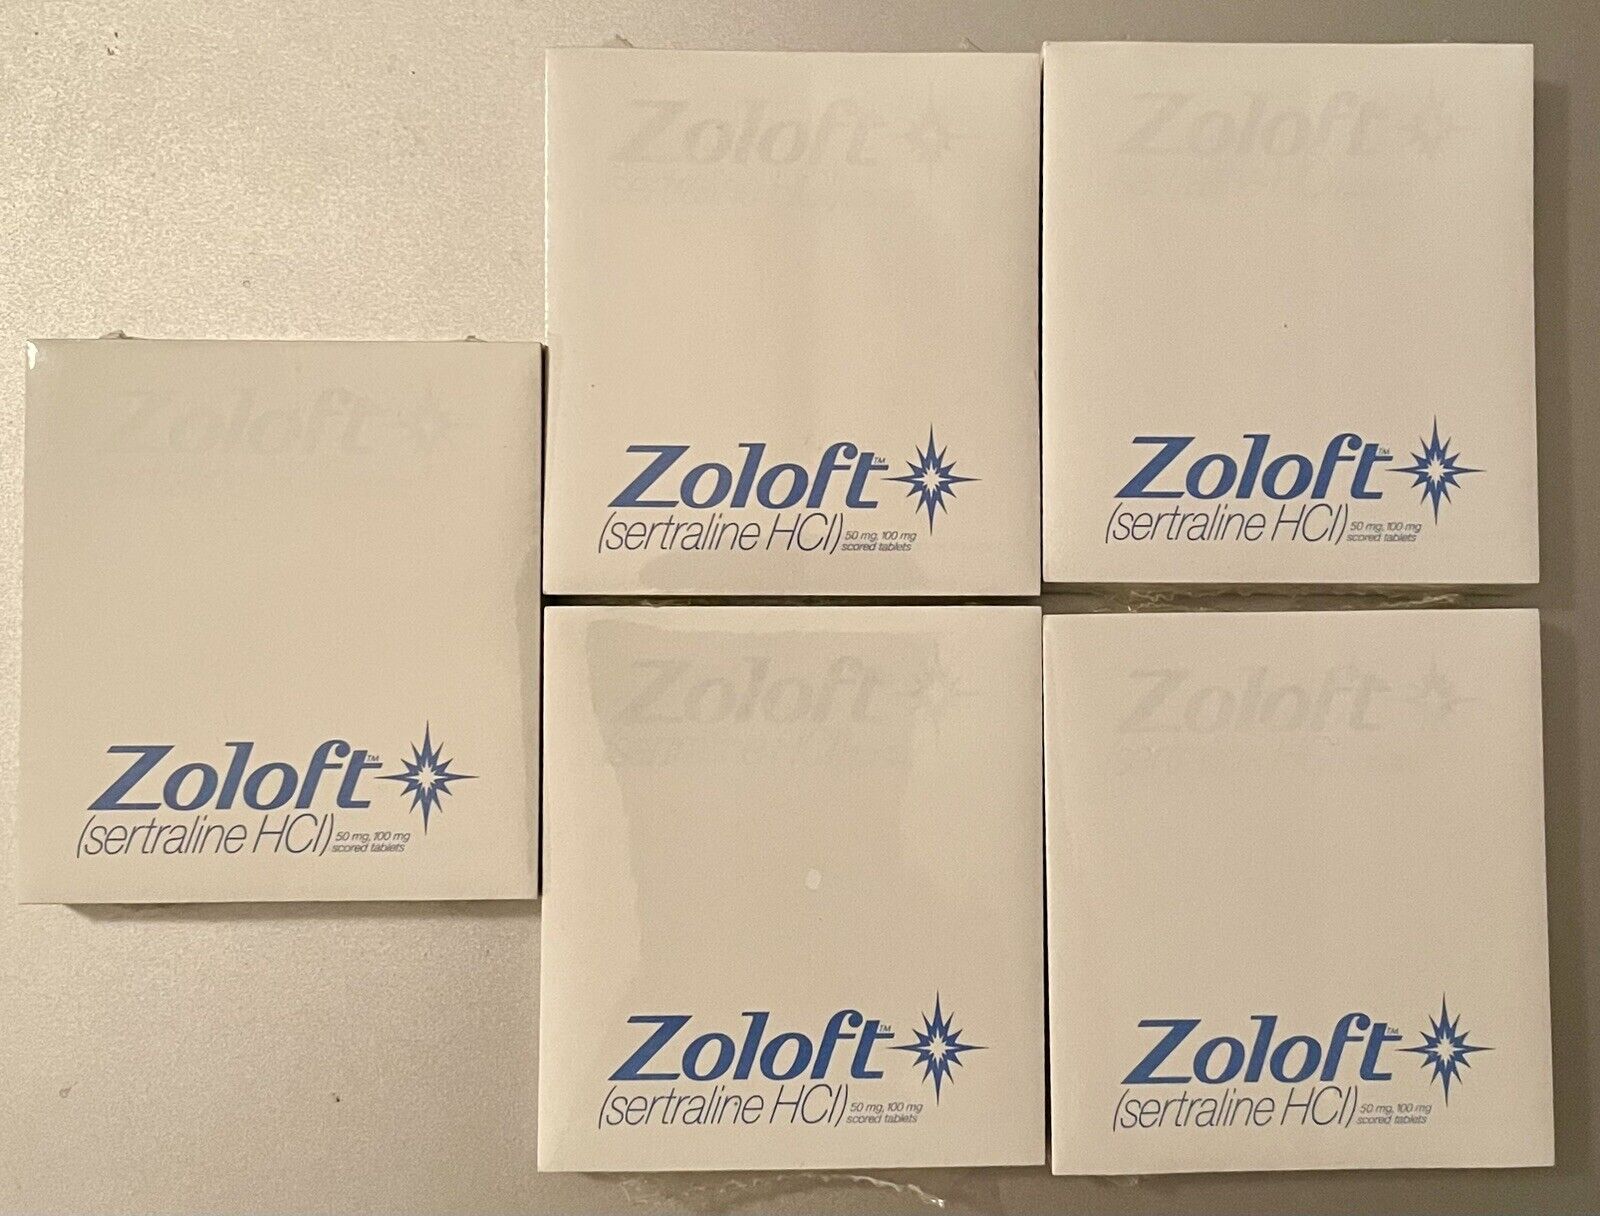 VTG 1990's LOT of 5 ZOLOFT Post-it Notes Pads Medical Pharma Logo Sealed New